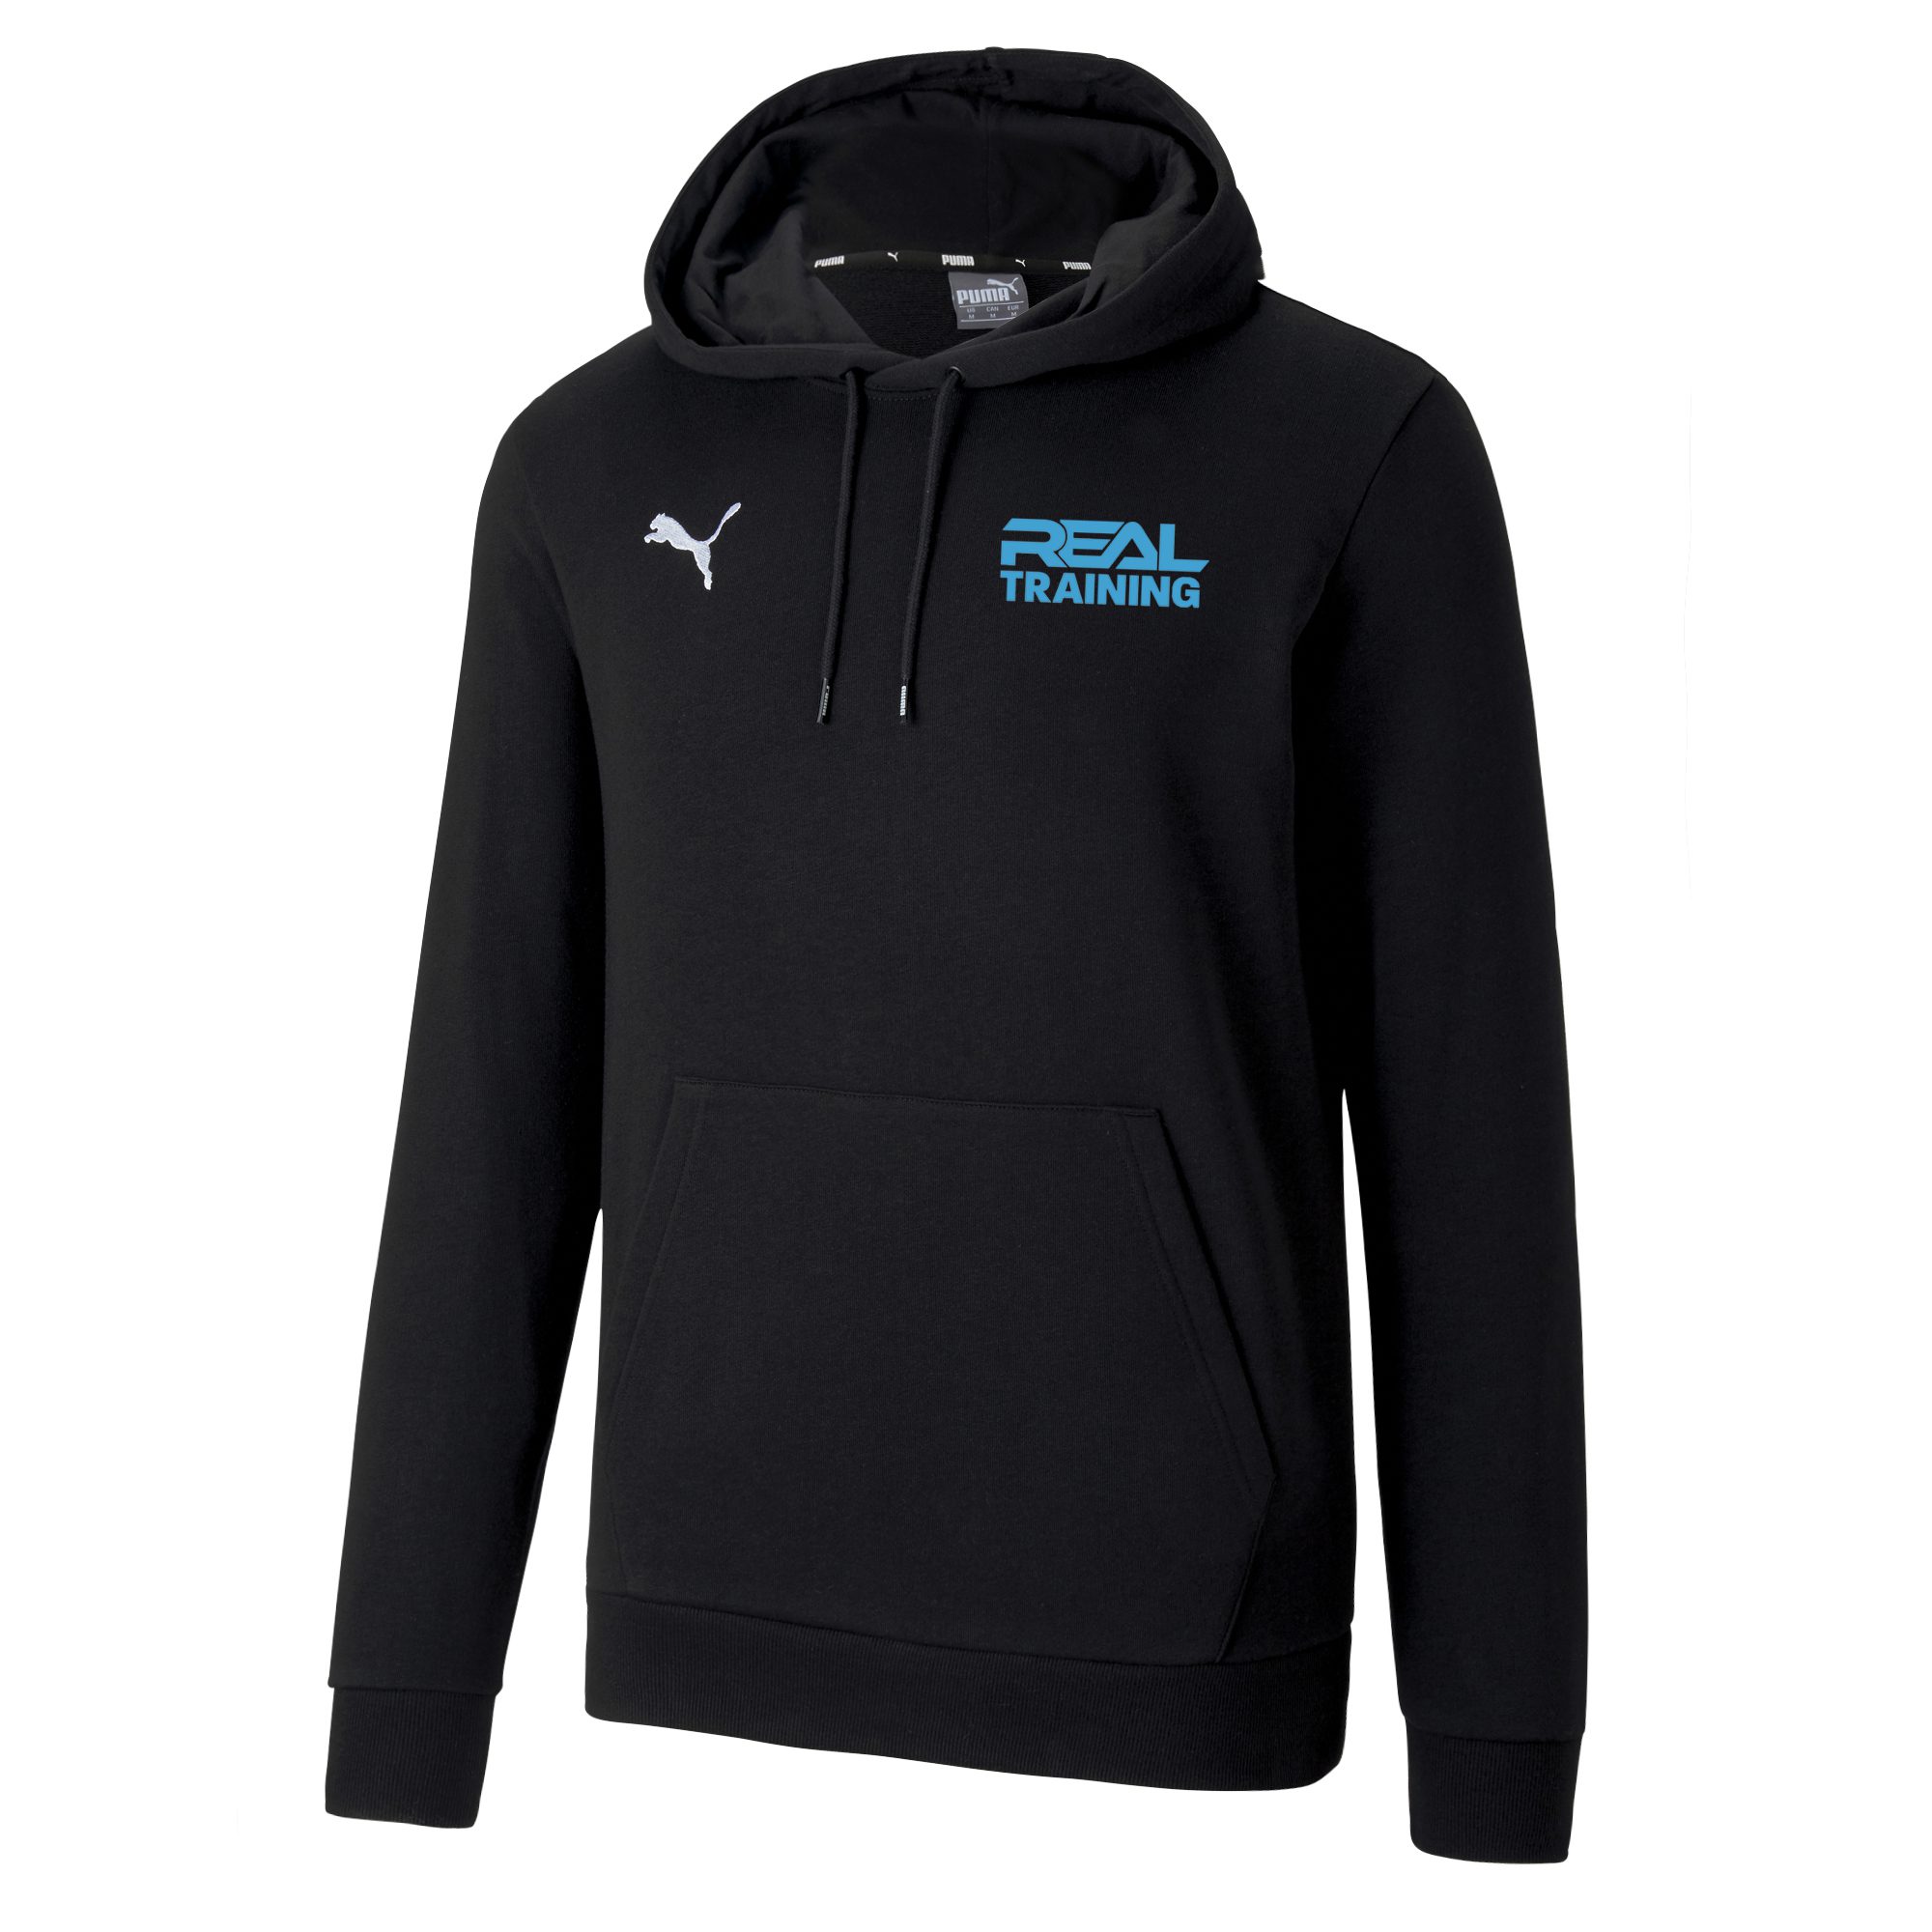 Puma team goal hoody black - Real Training - Sportsclique Shop